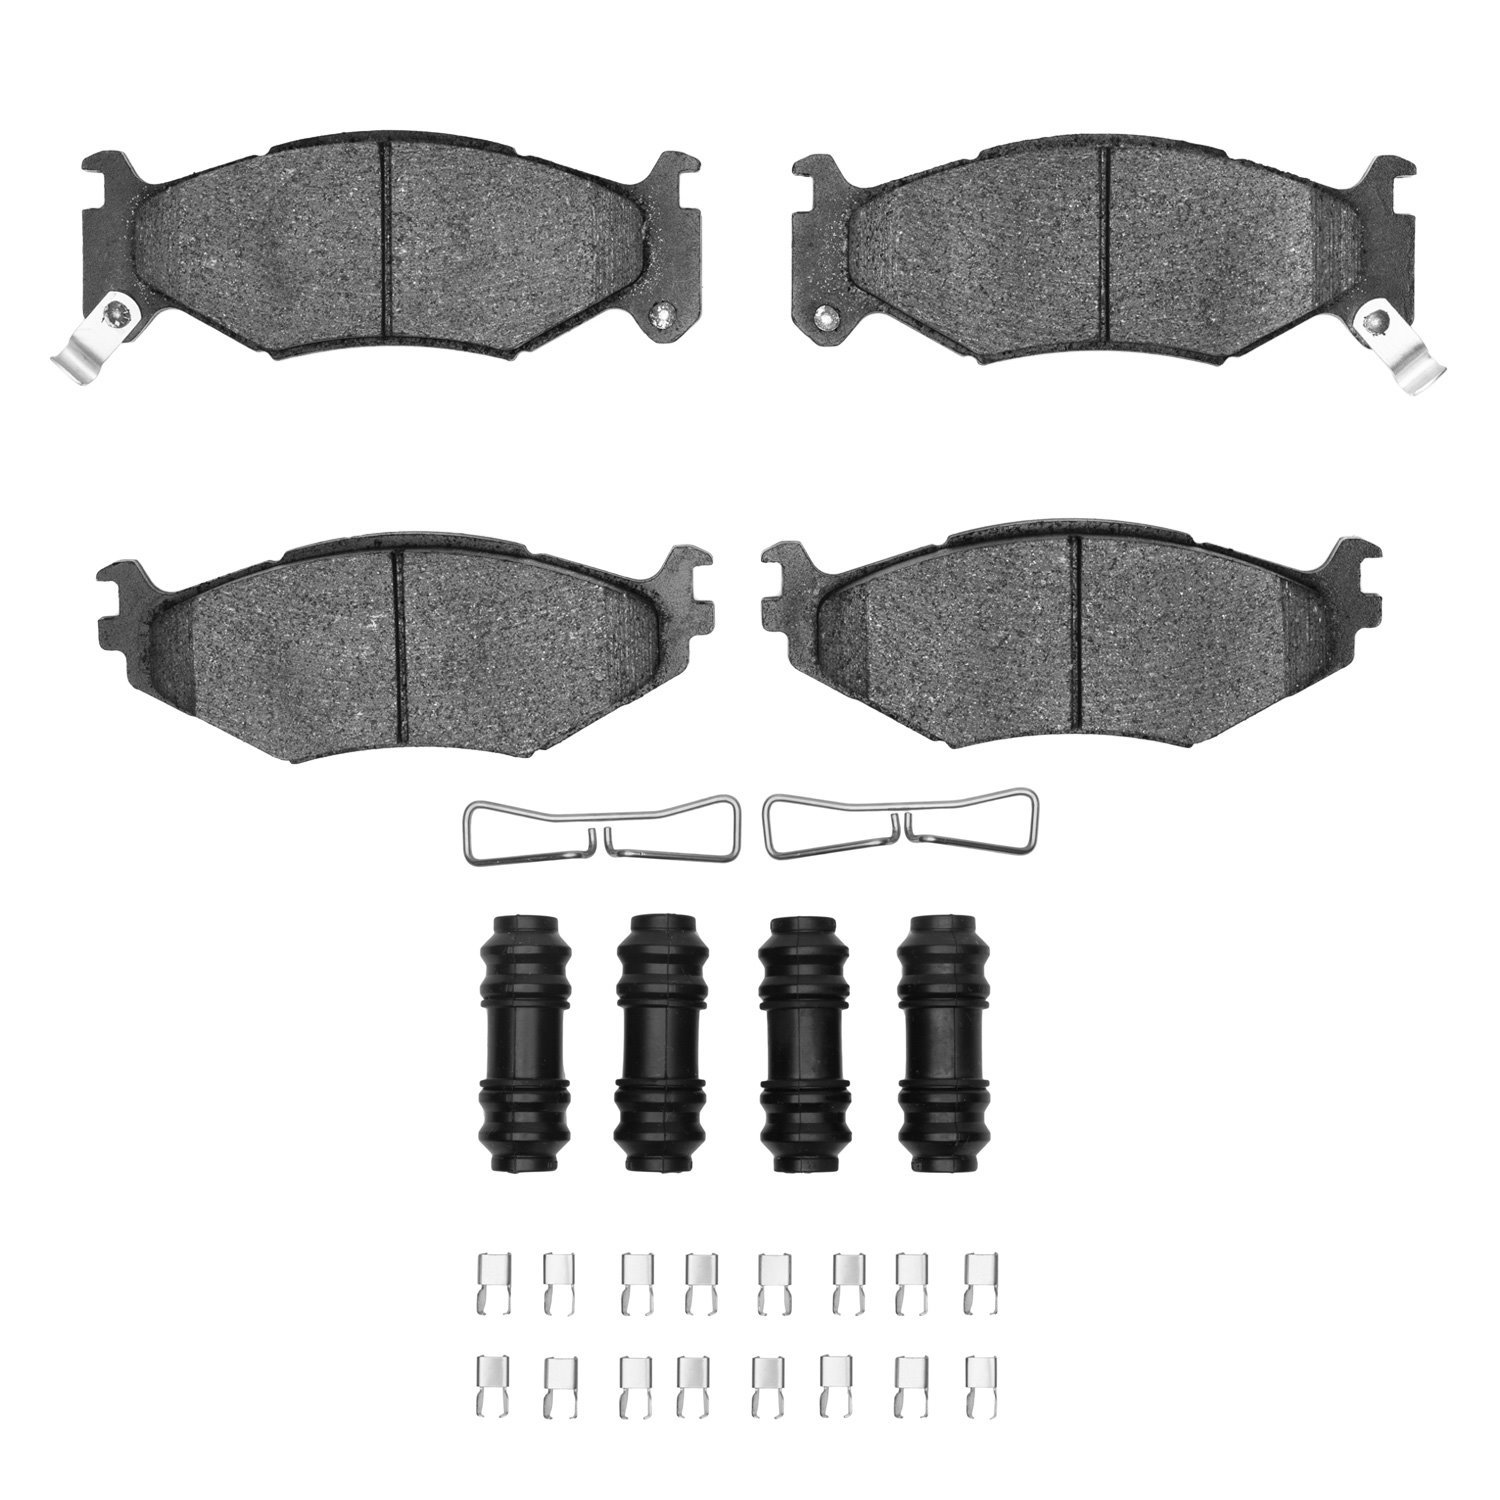 1310-0522-01 3000-Series Ceramic Brake Pads & Hardware Kit, 1991-1995 Mopar, Position: Front